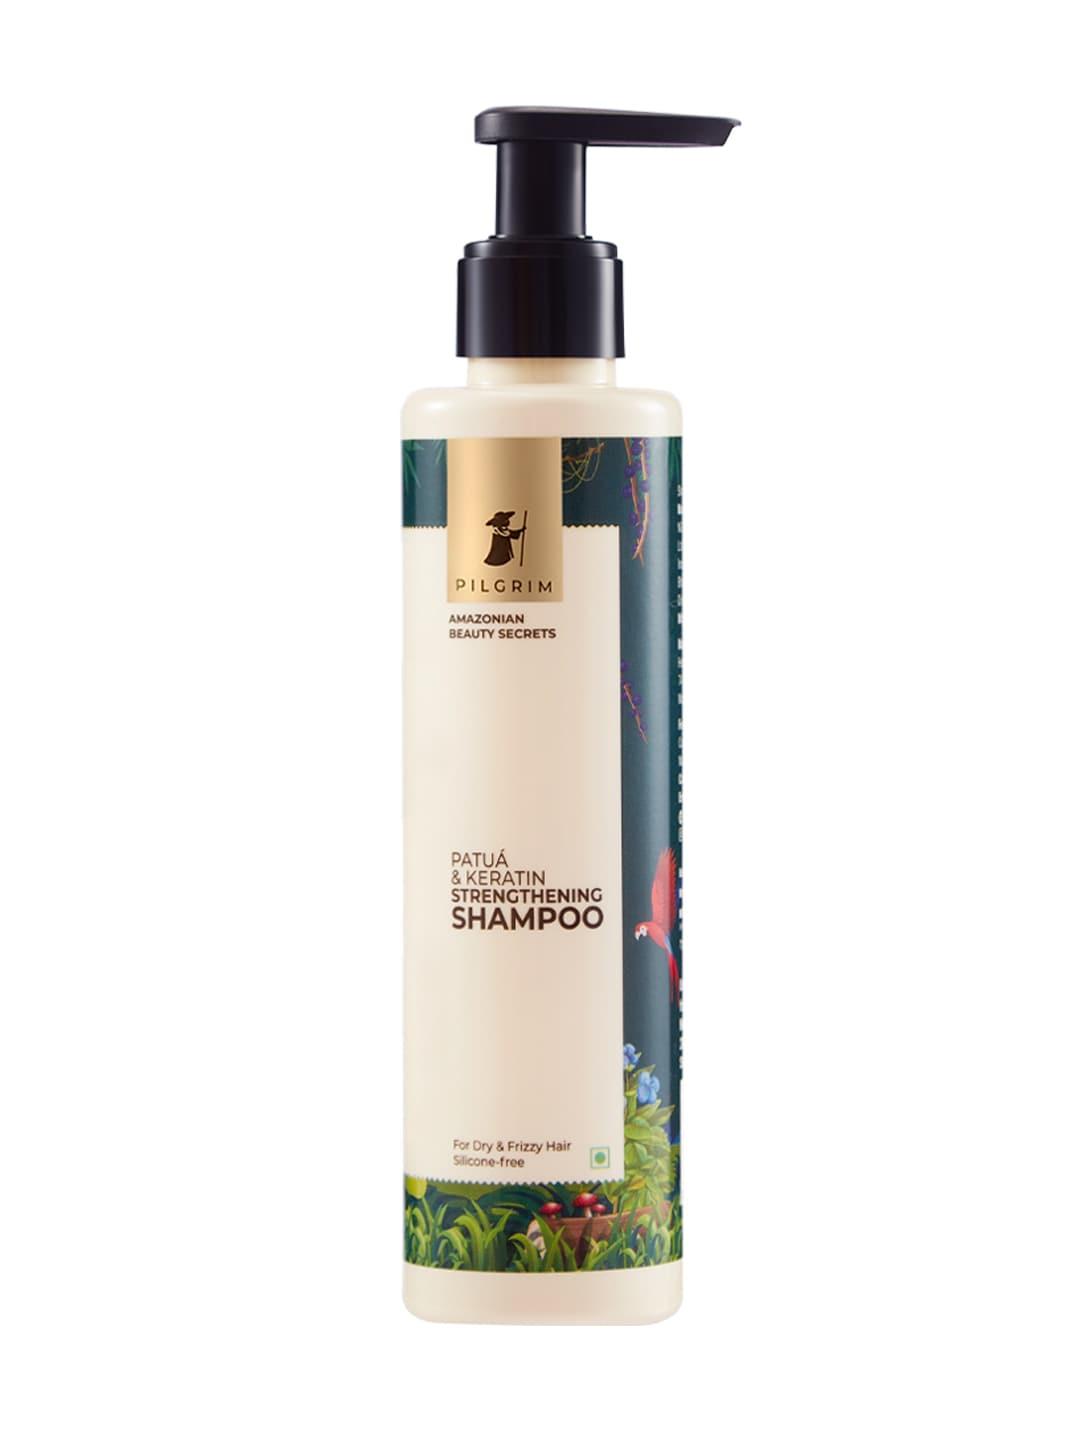 Pilgrim Advanced Patua & Keratin Strengthening Shampoo Sacha Inchi for Dry & Frizzy Hair